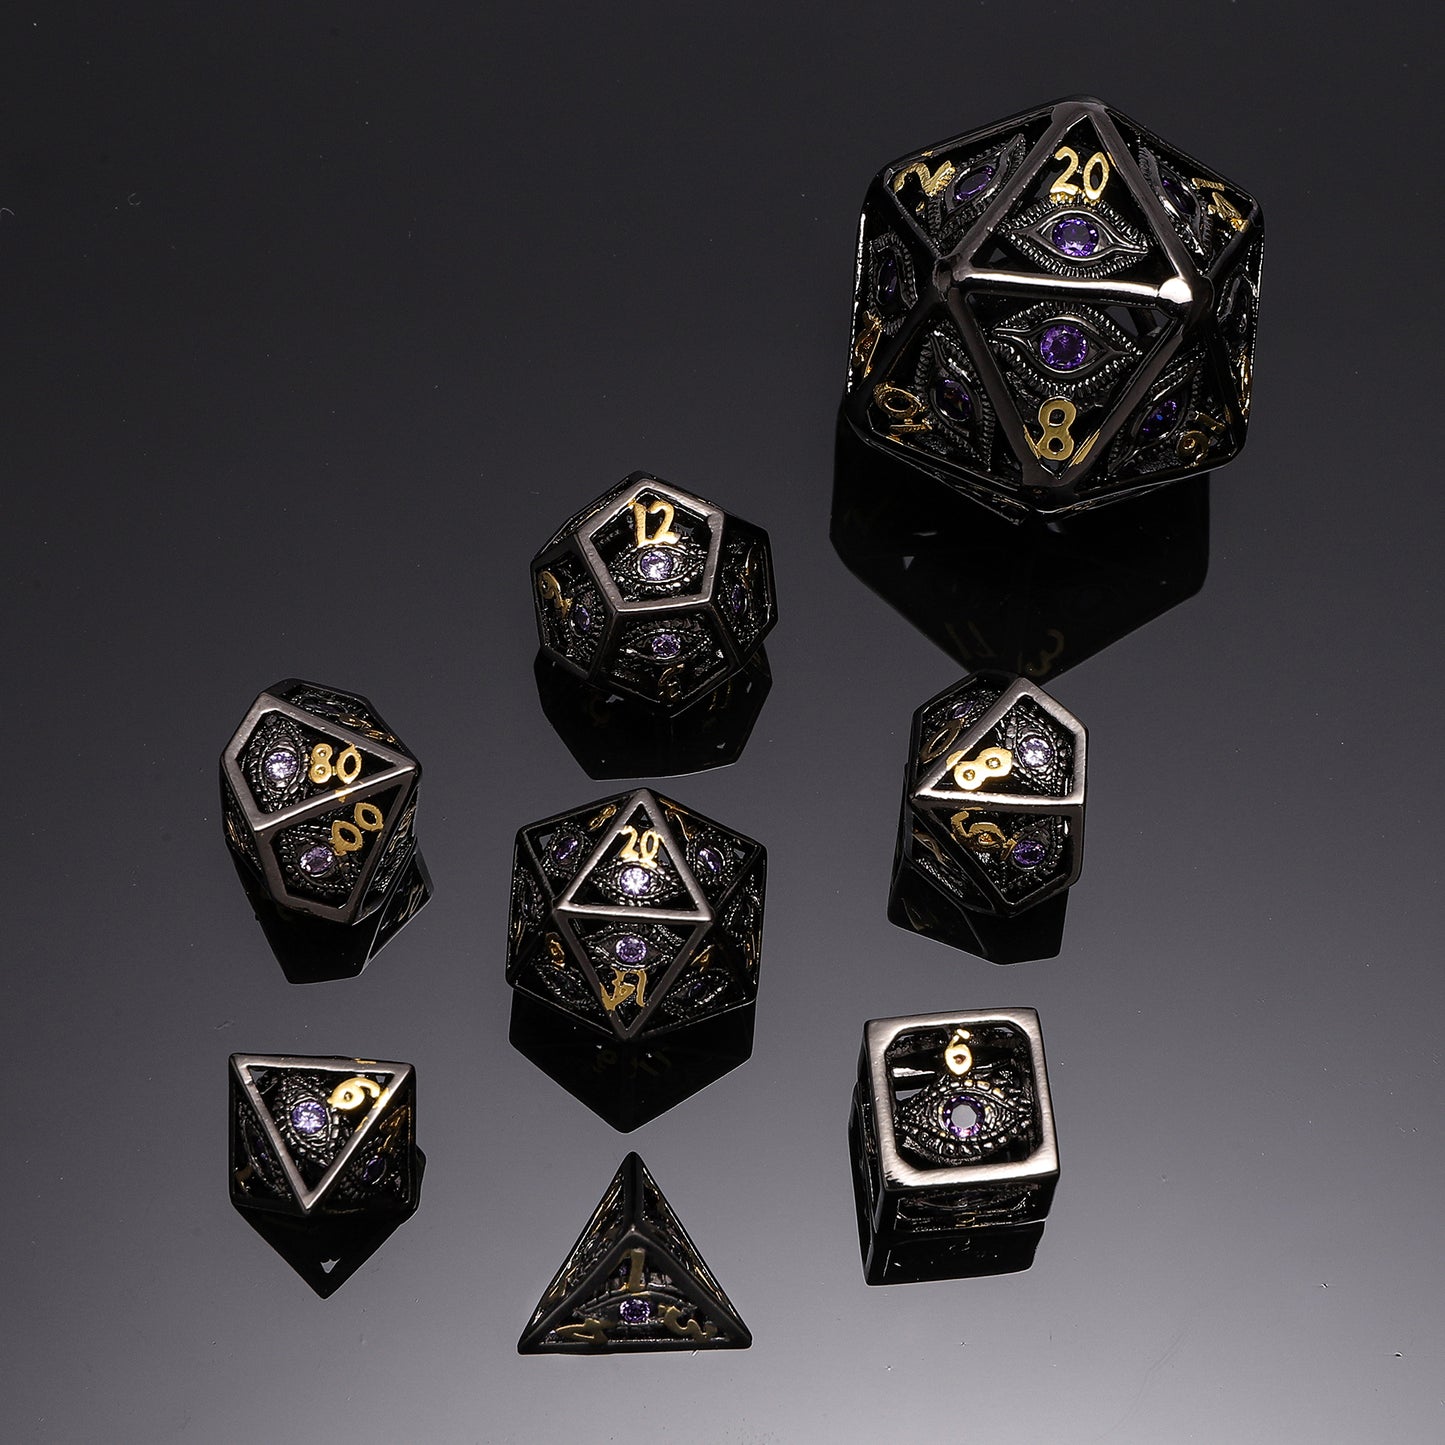 Hollow 10mm mini Dragon's Eye dice set-Gunmetal with Purple Gems